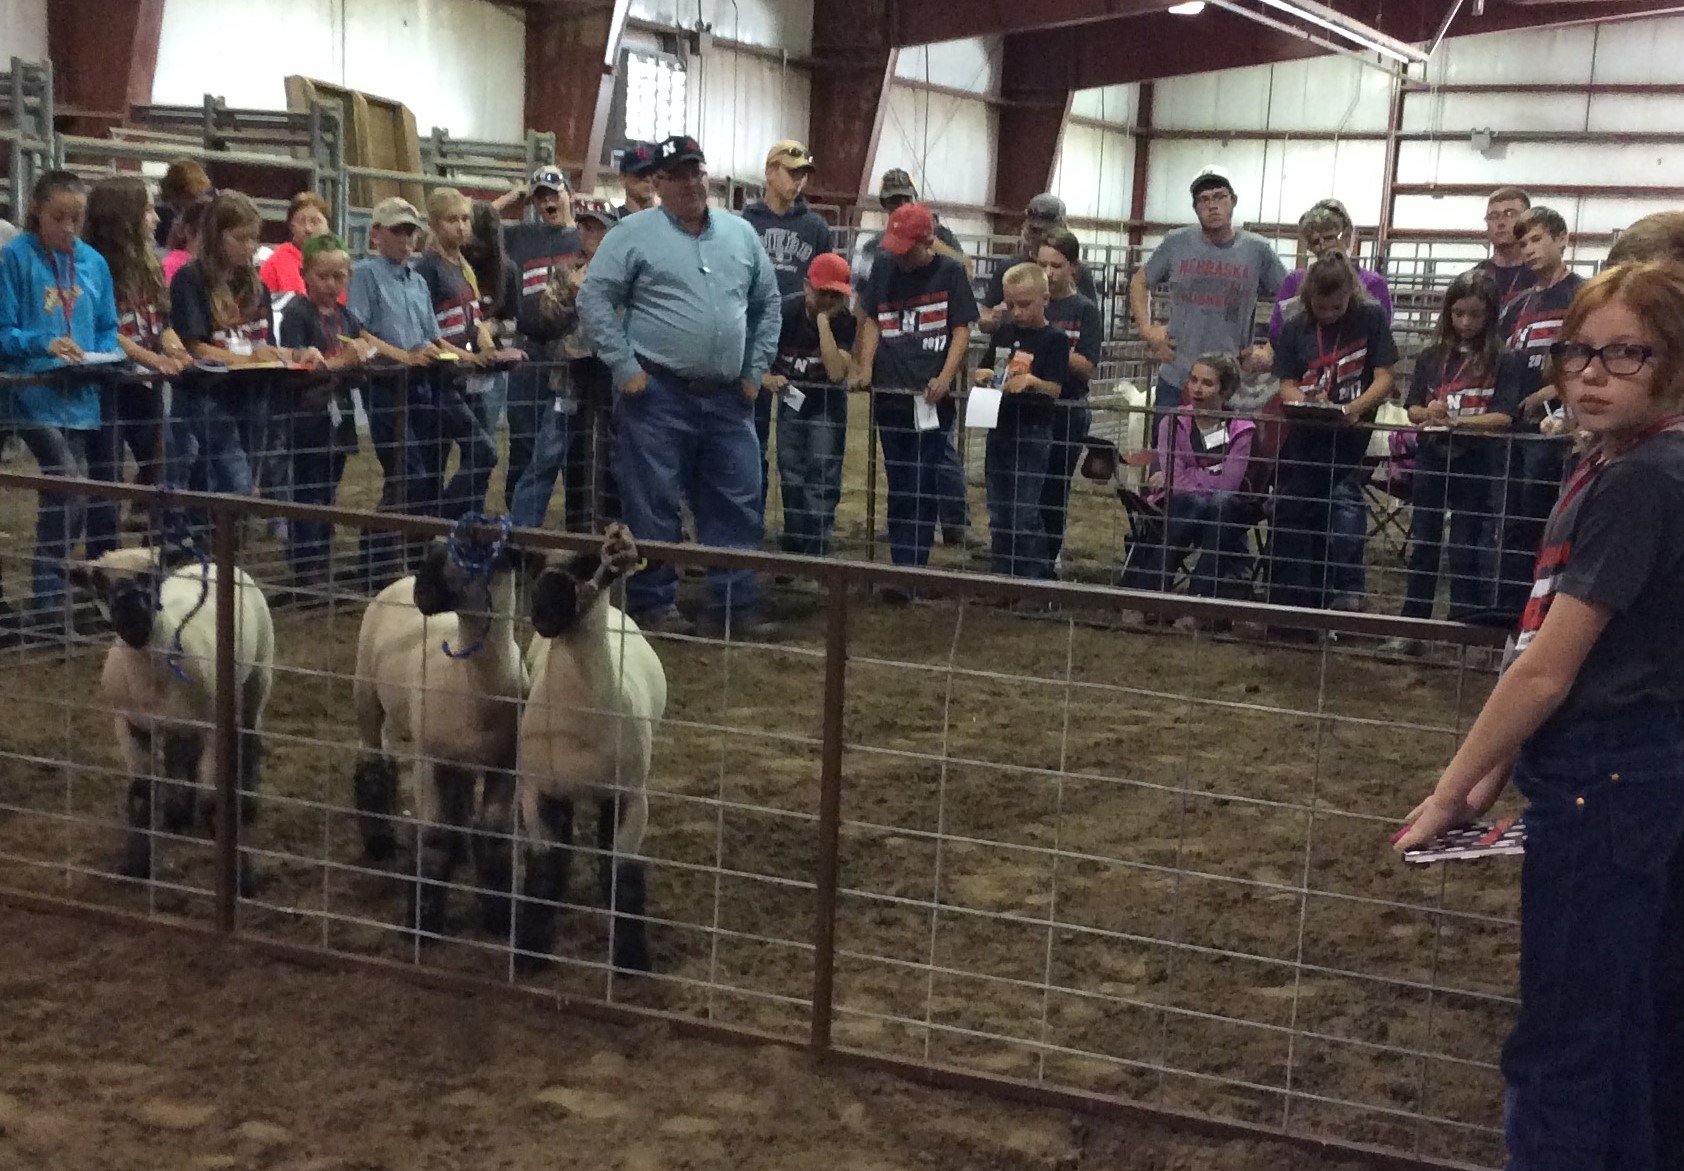  Dr. Doug Smith explains sheep judging at the Standard of Excellence Livestock Judging Camp at NCTA. (File Photo)